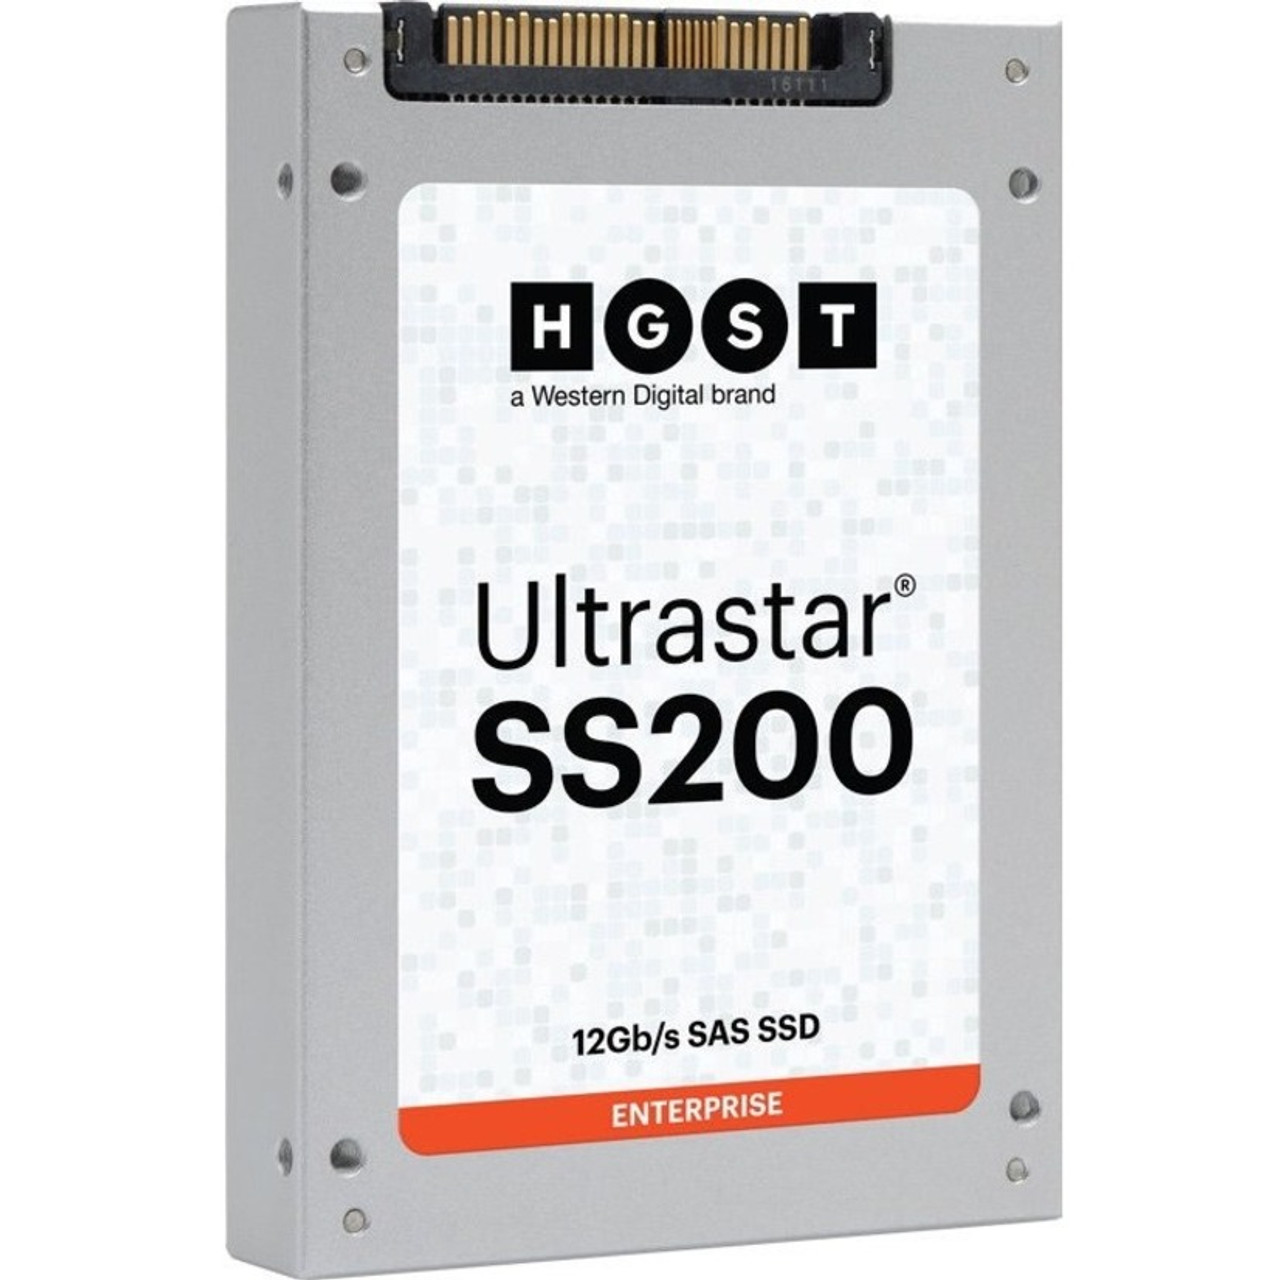 HGST Ultrastar SS200 800 GB Solid State Drive - Internal - SAS (12Gb/s SAS)